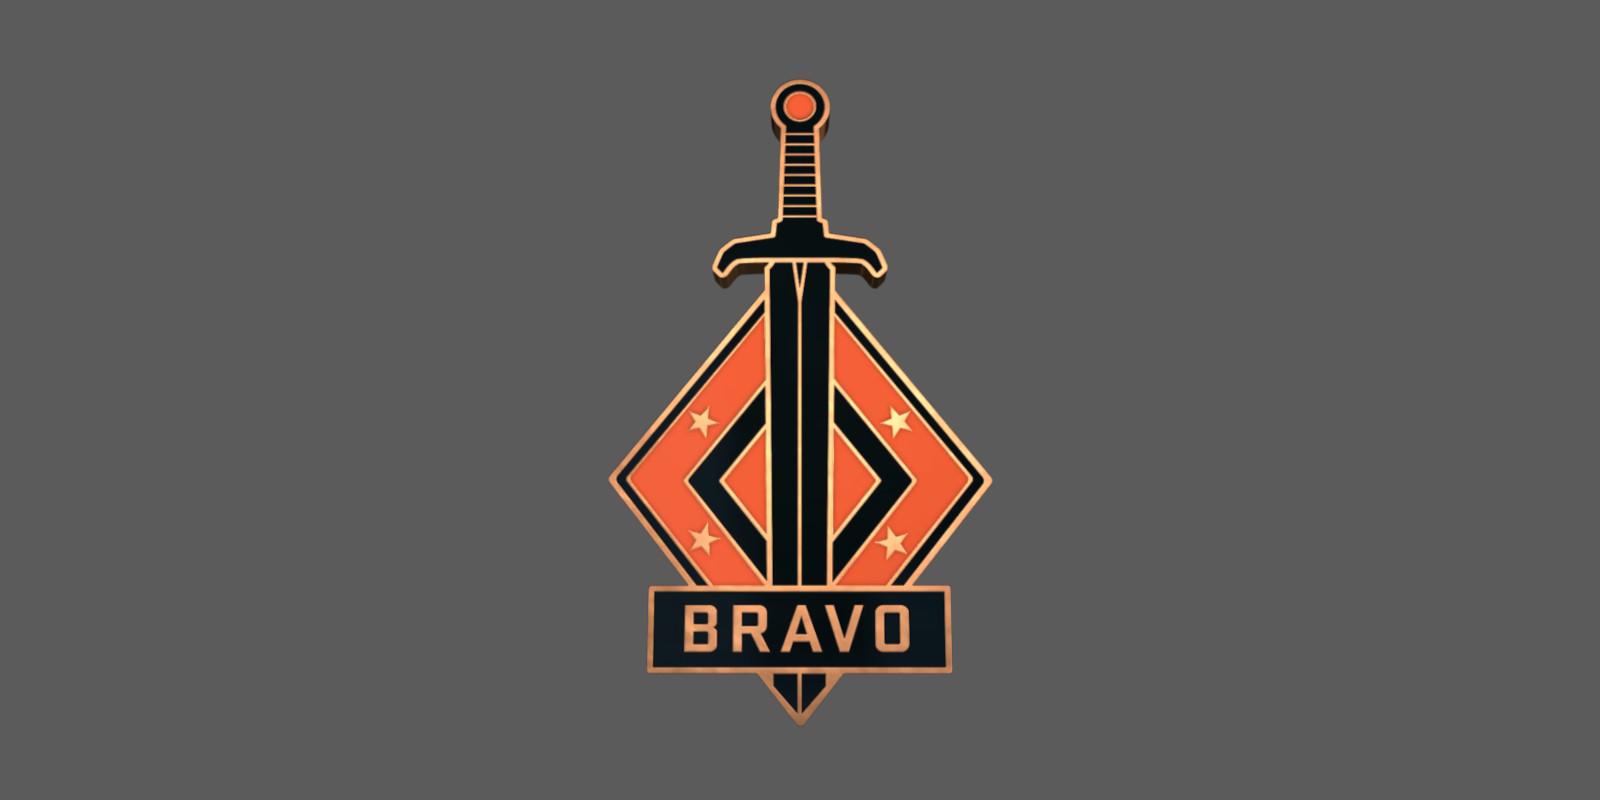 CS:GO - Series 2 - Bravo Collectible Pin